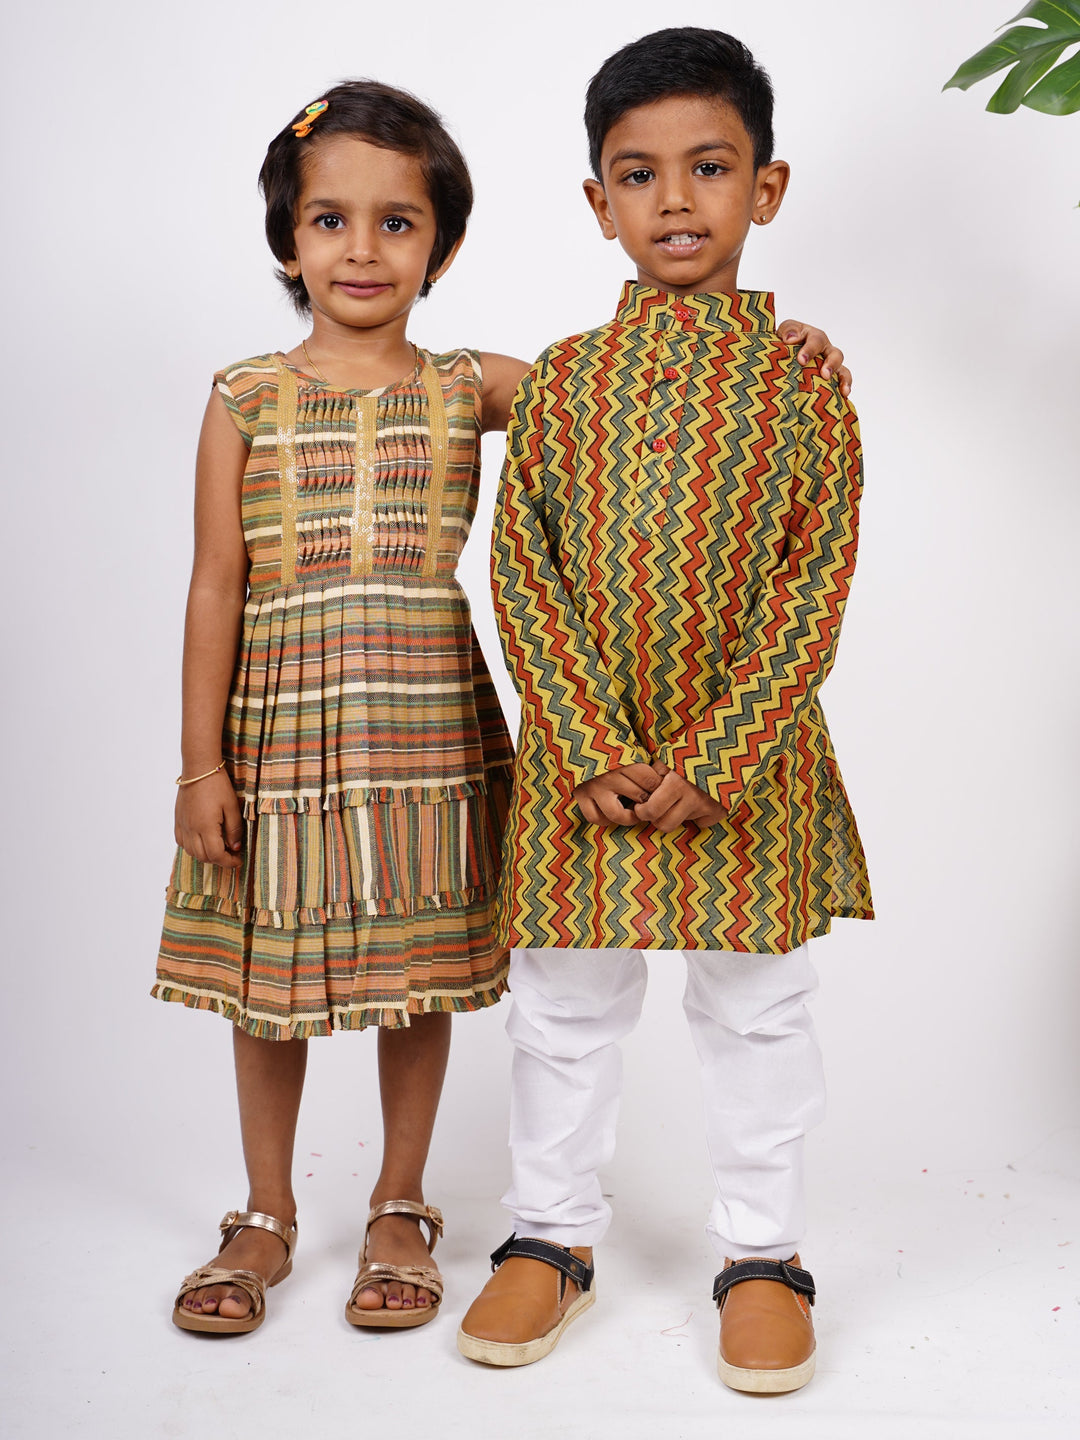 The Nesavu Frocks & Dresses Soft Cotton Striped Casual Play Wear For Baby Girls psr silks Nesavu